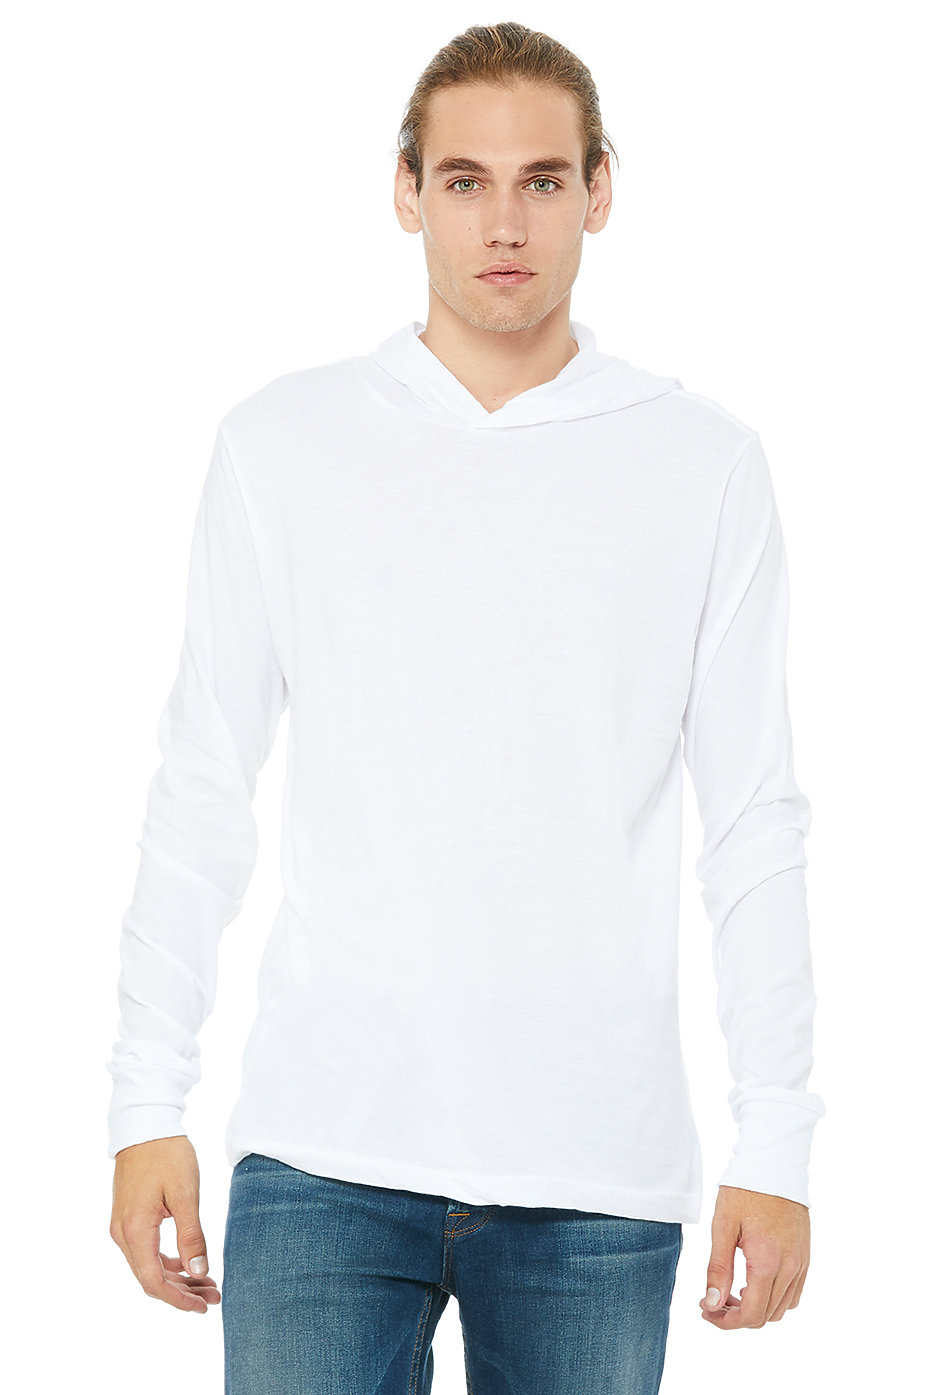 Shirts & Tops, Boston Red Sox Sweatshirt Hoodie Gray Youth Xl